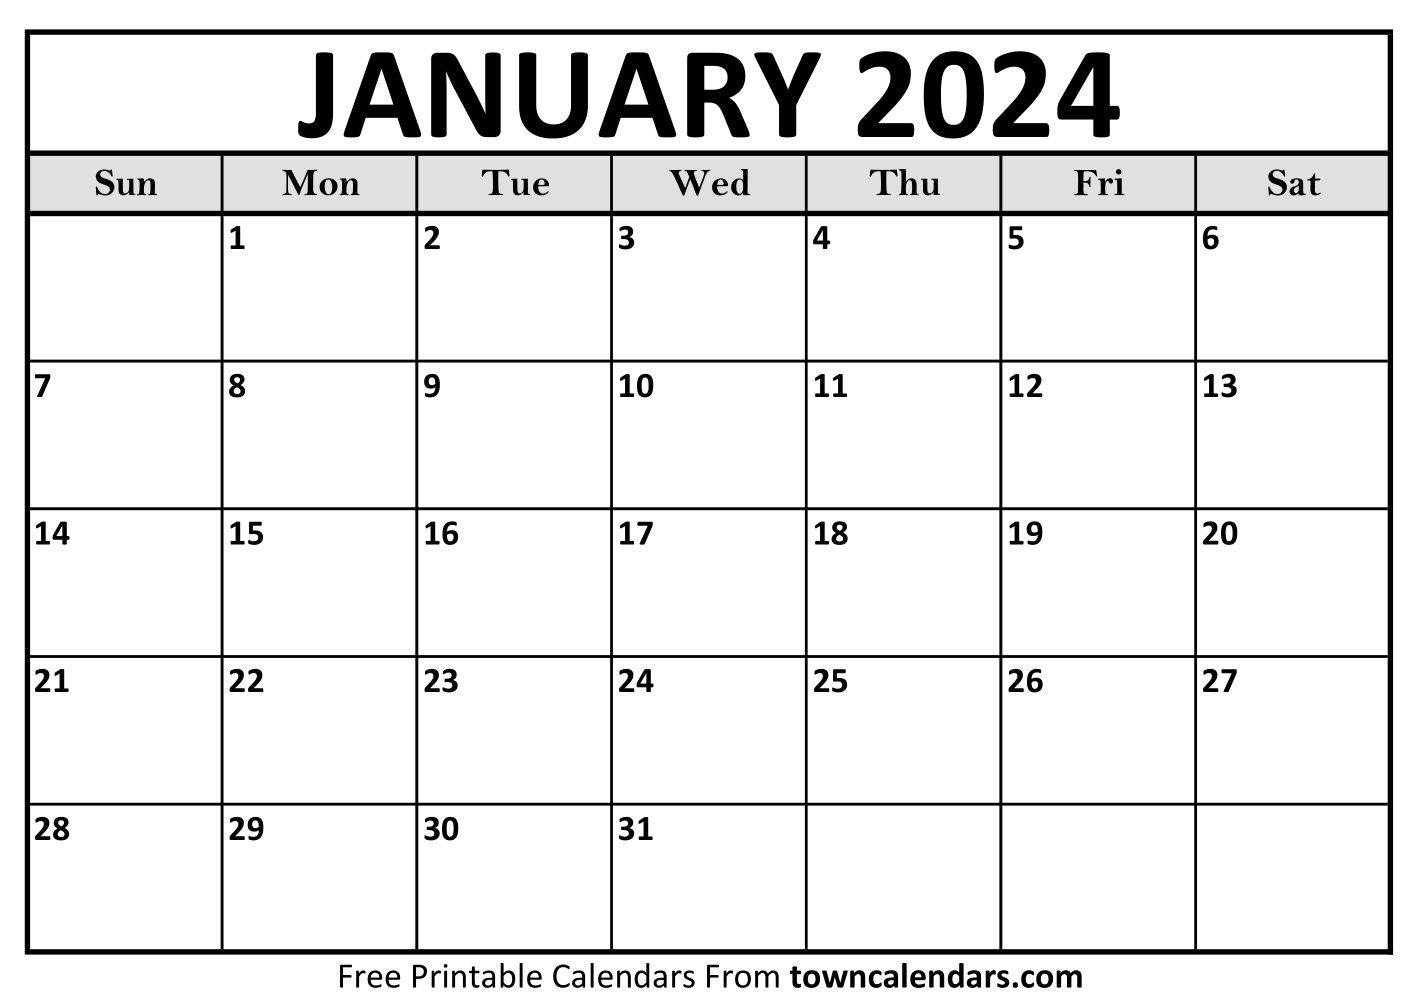 Printable January 2024 Calendar Towncalendars - Free Printable 2024 Calendar From Towncalendars